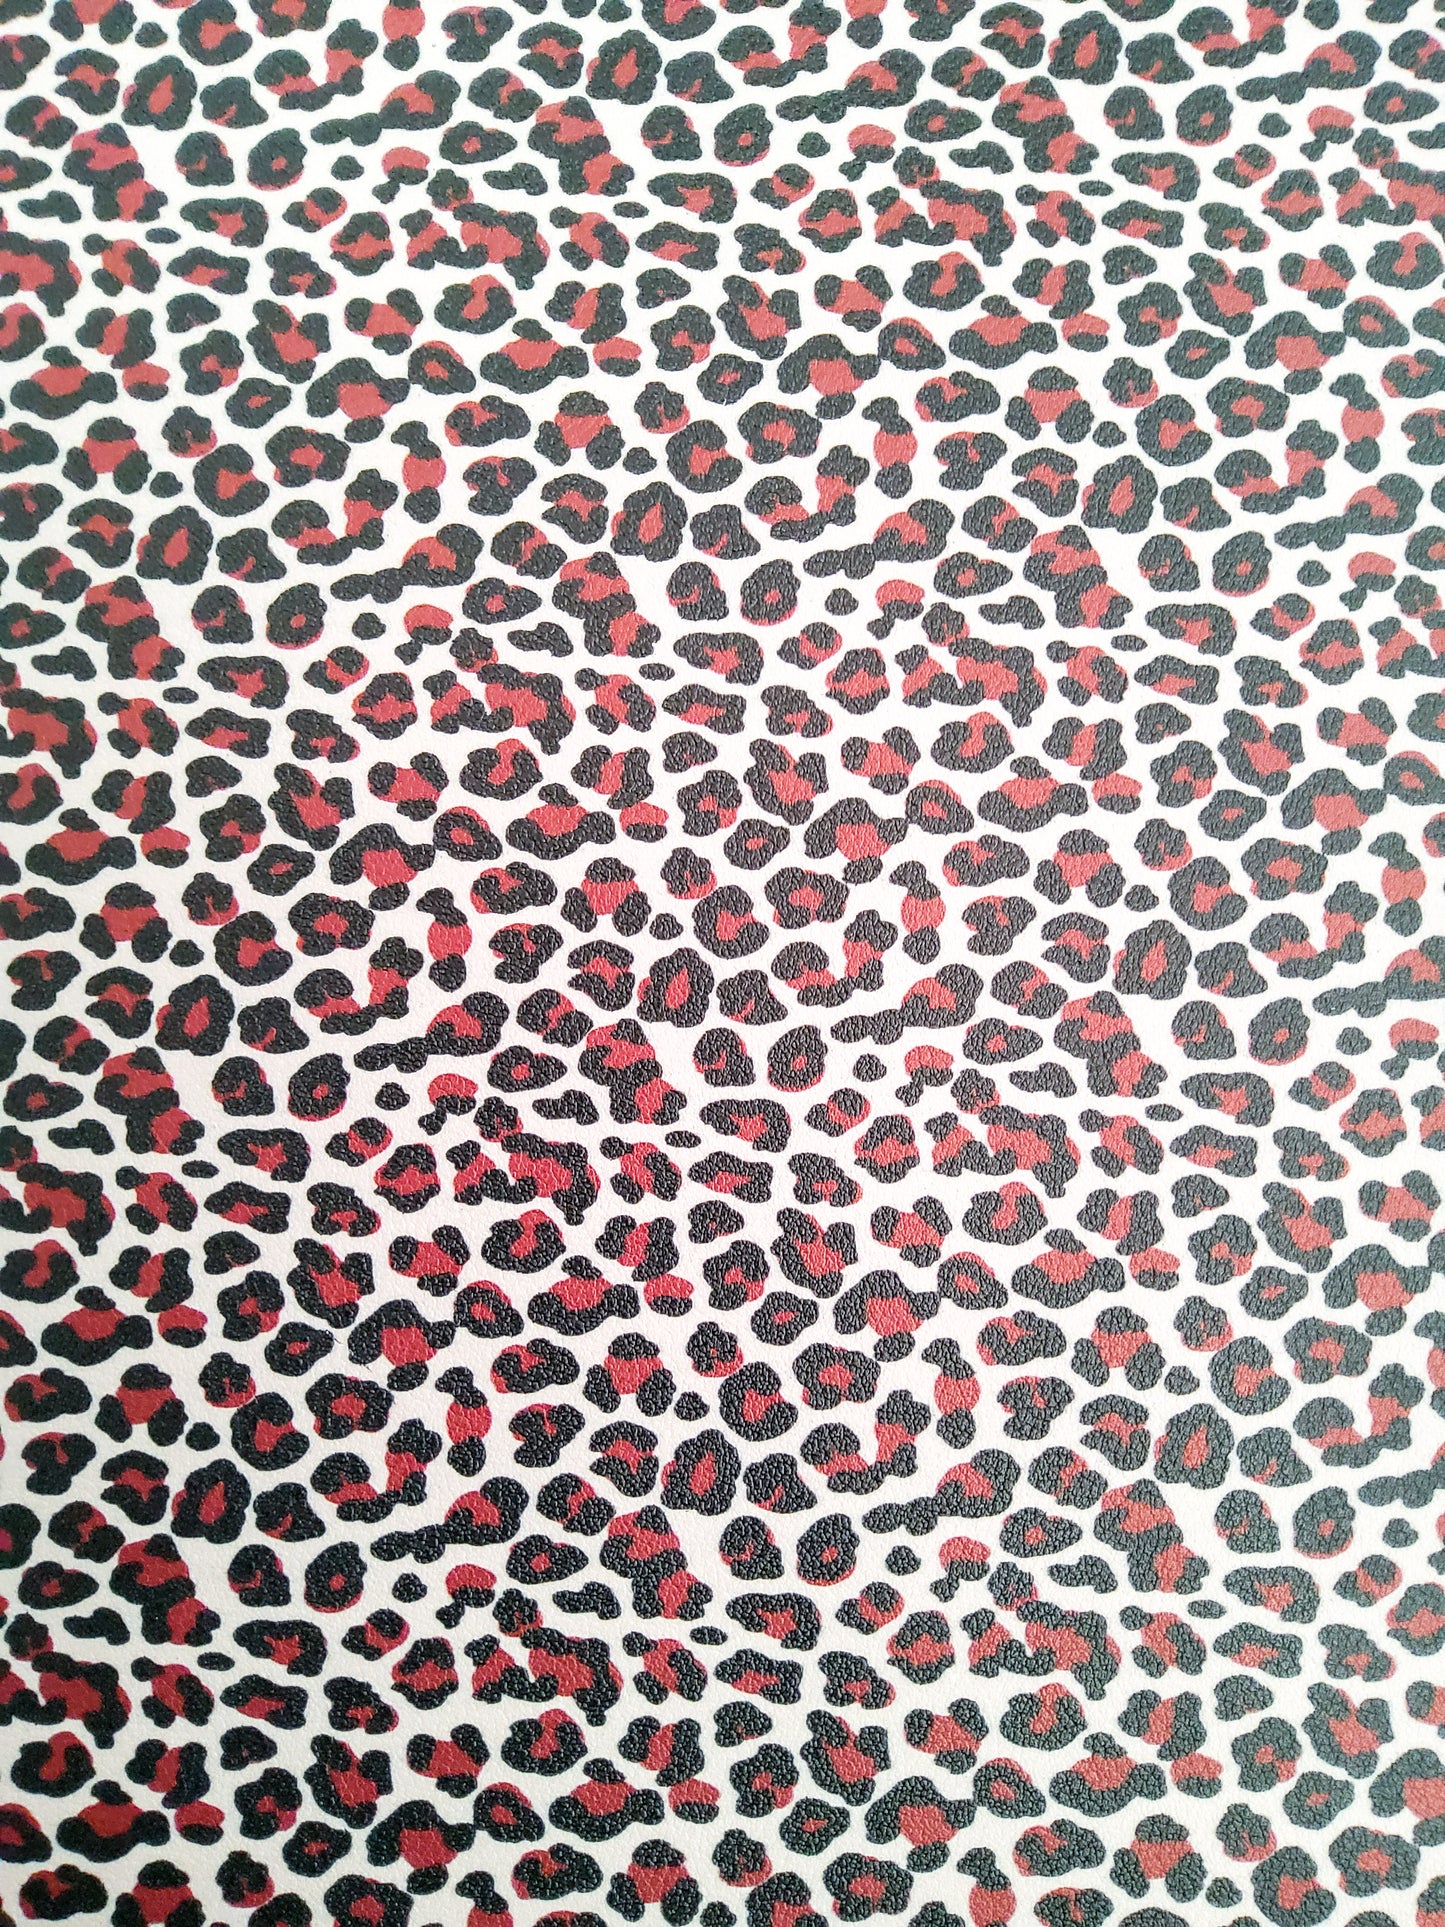 Large Leopard/Cheetah Animal Print 9x12 faux leather sheet